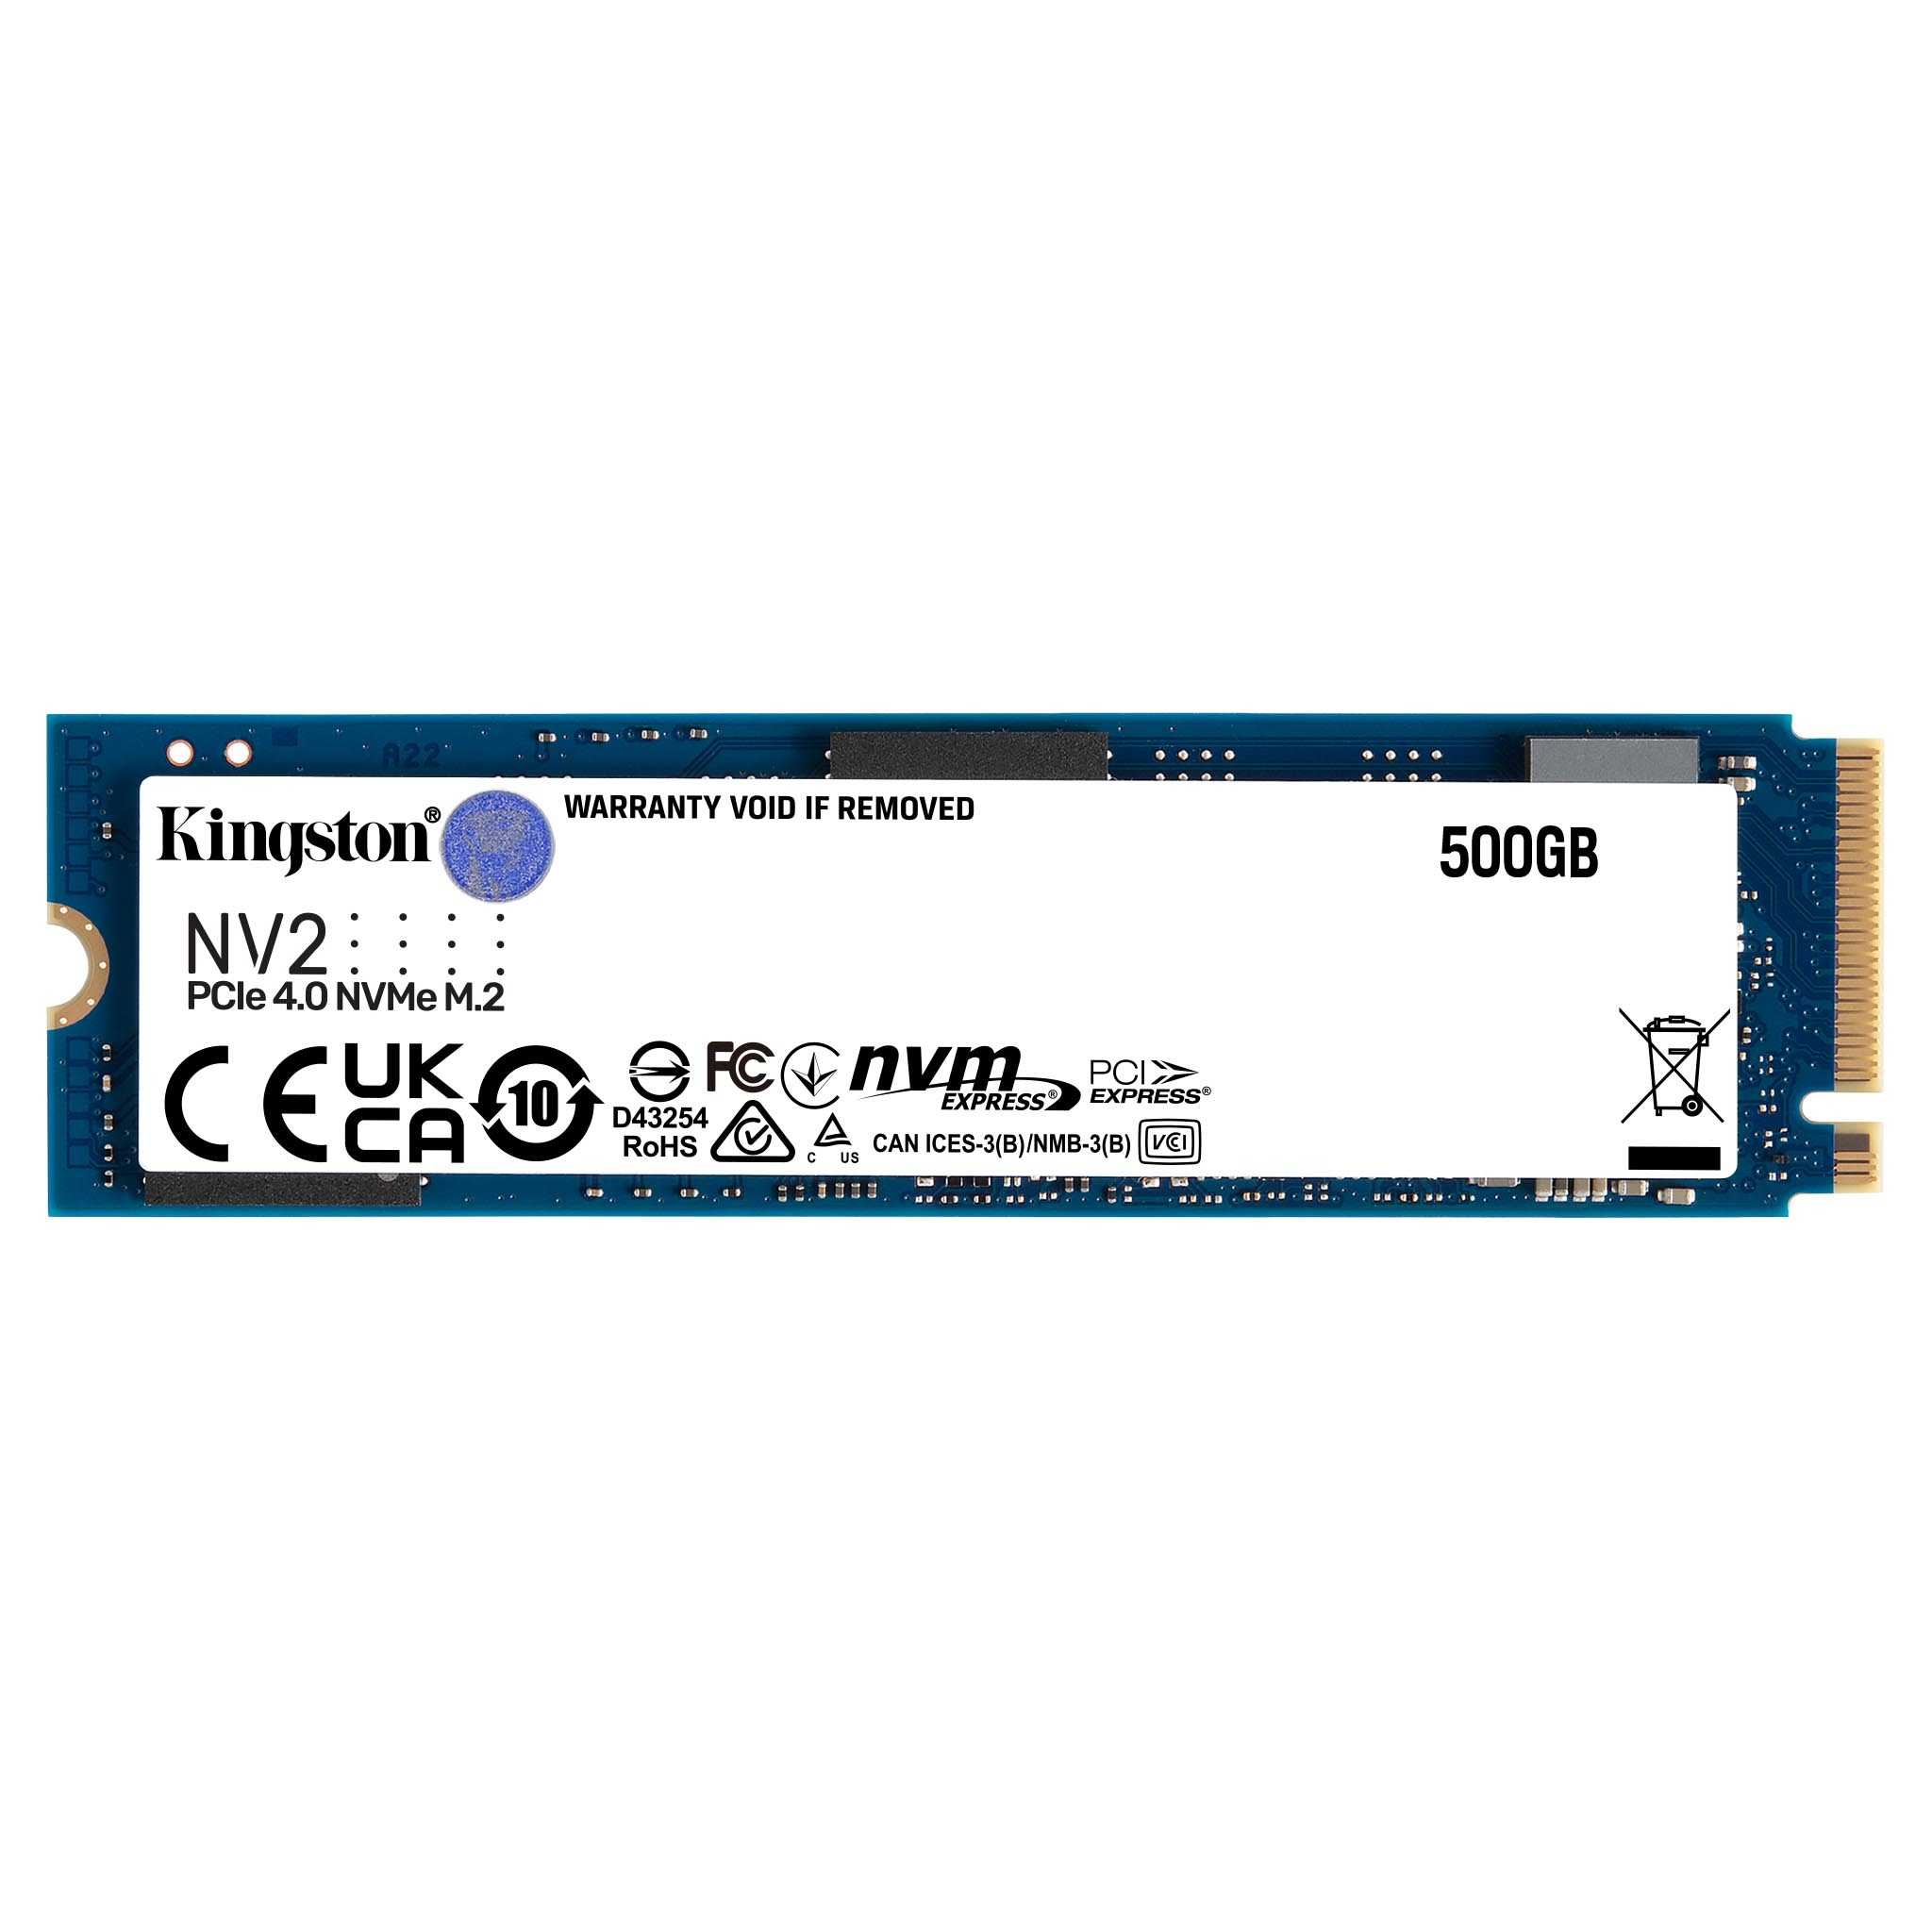 Kingston NV2 500GB  PCIe 4.0 NVMe SSD M.2